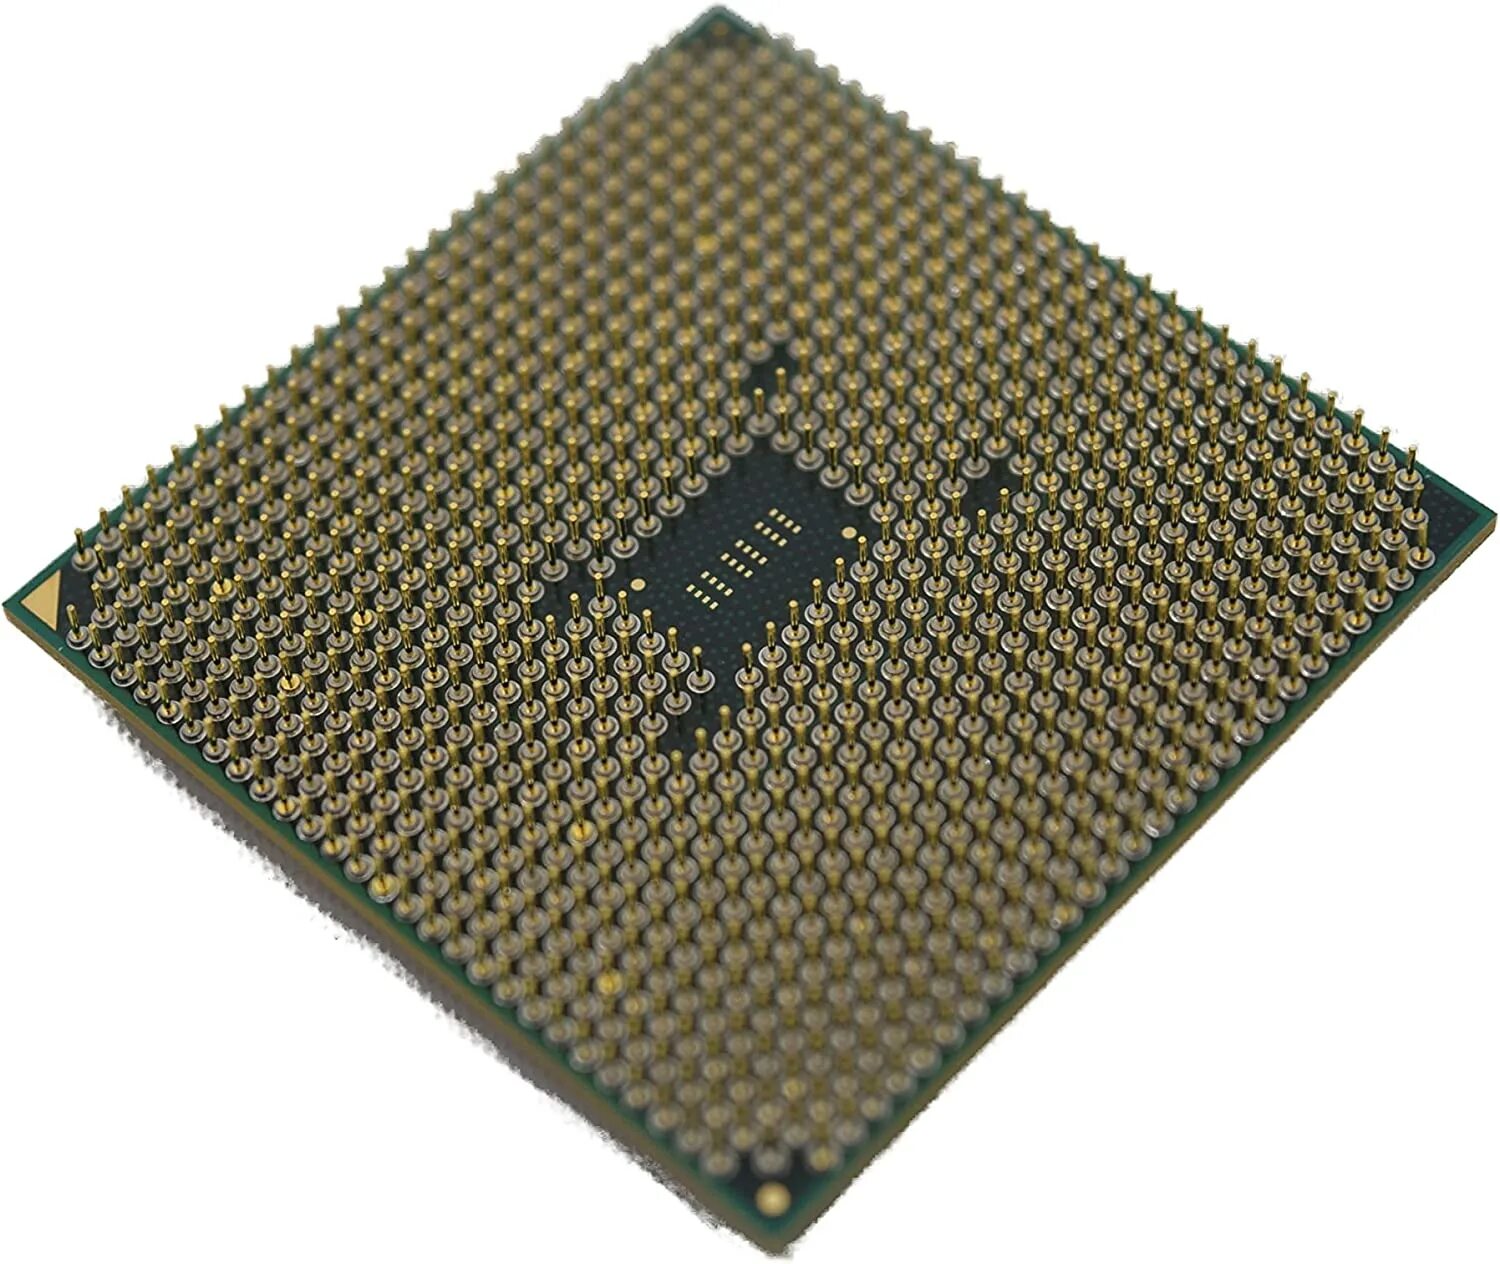 5500 сокет. Fm2 AMD a8-5500. AMD a8-5500 Trinity fm2, 4 x 3200 МГЦ. Процессор а8 5500. AMD 7560d.